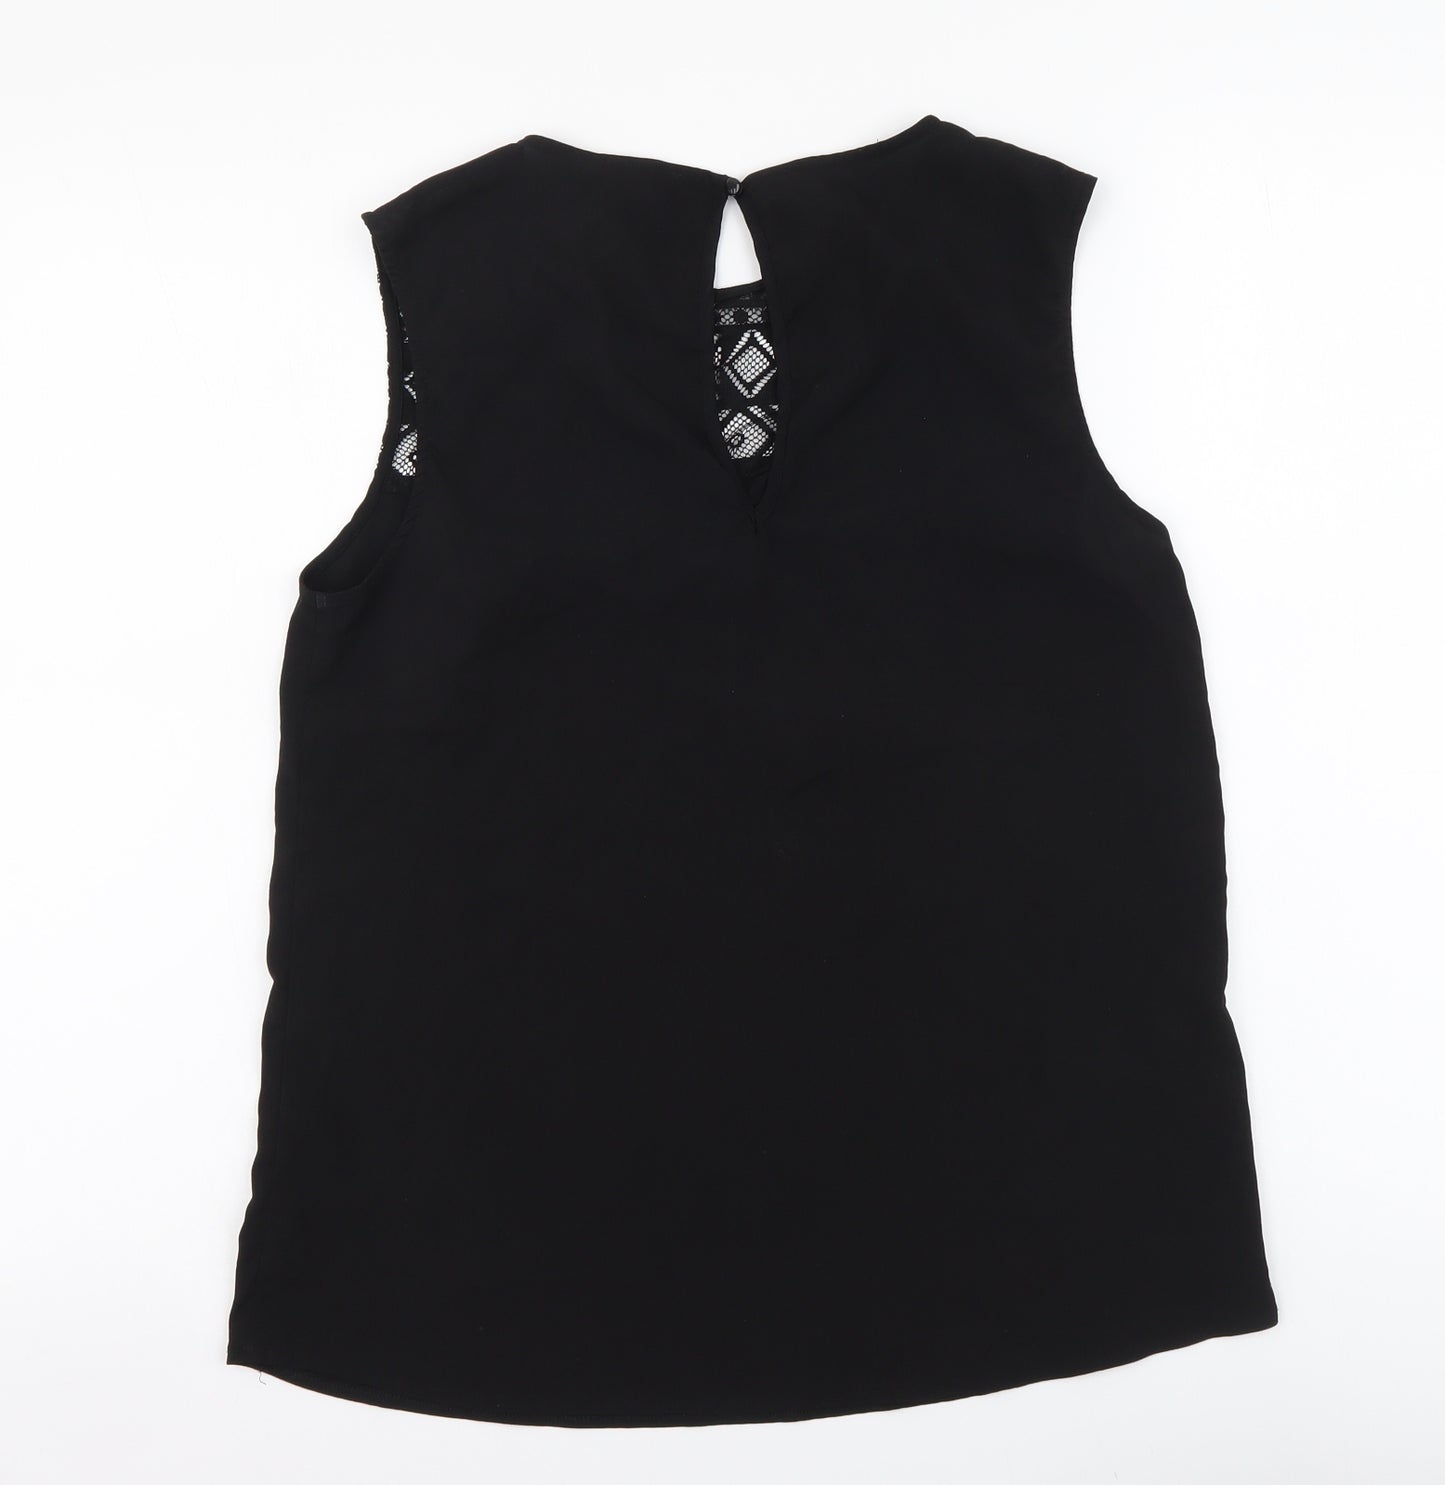 A&G Womens Black Polyester Basic Tank Size M Round Neck